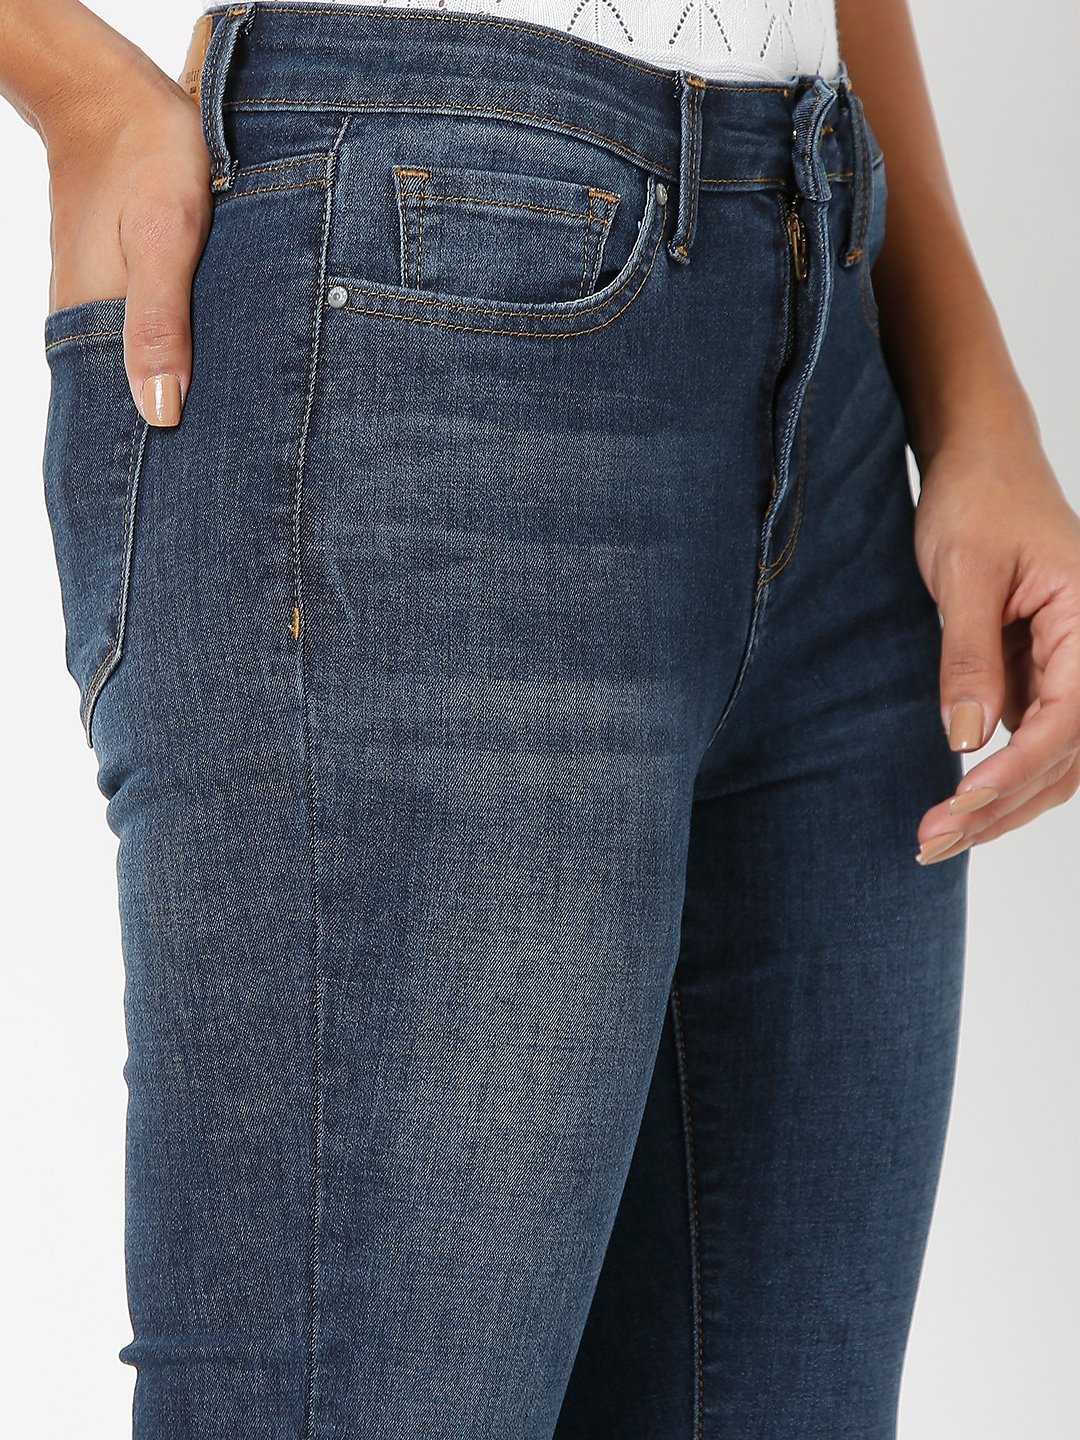 Women's Blue Cotton Solid Bootcut Jeans